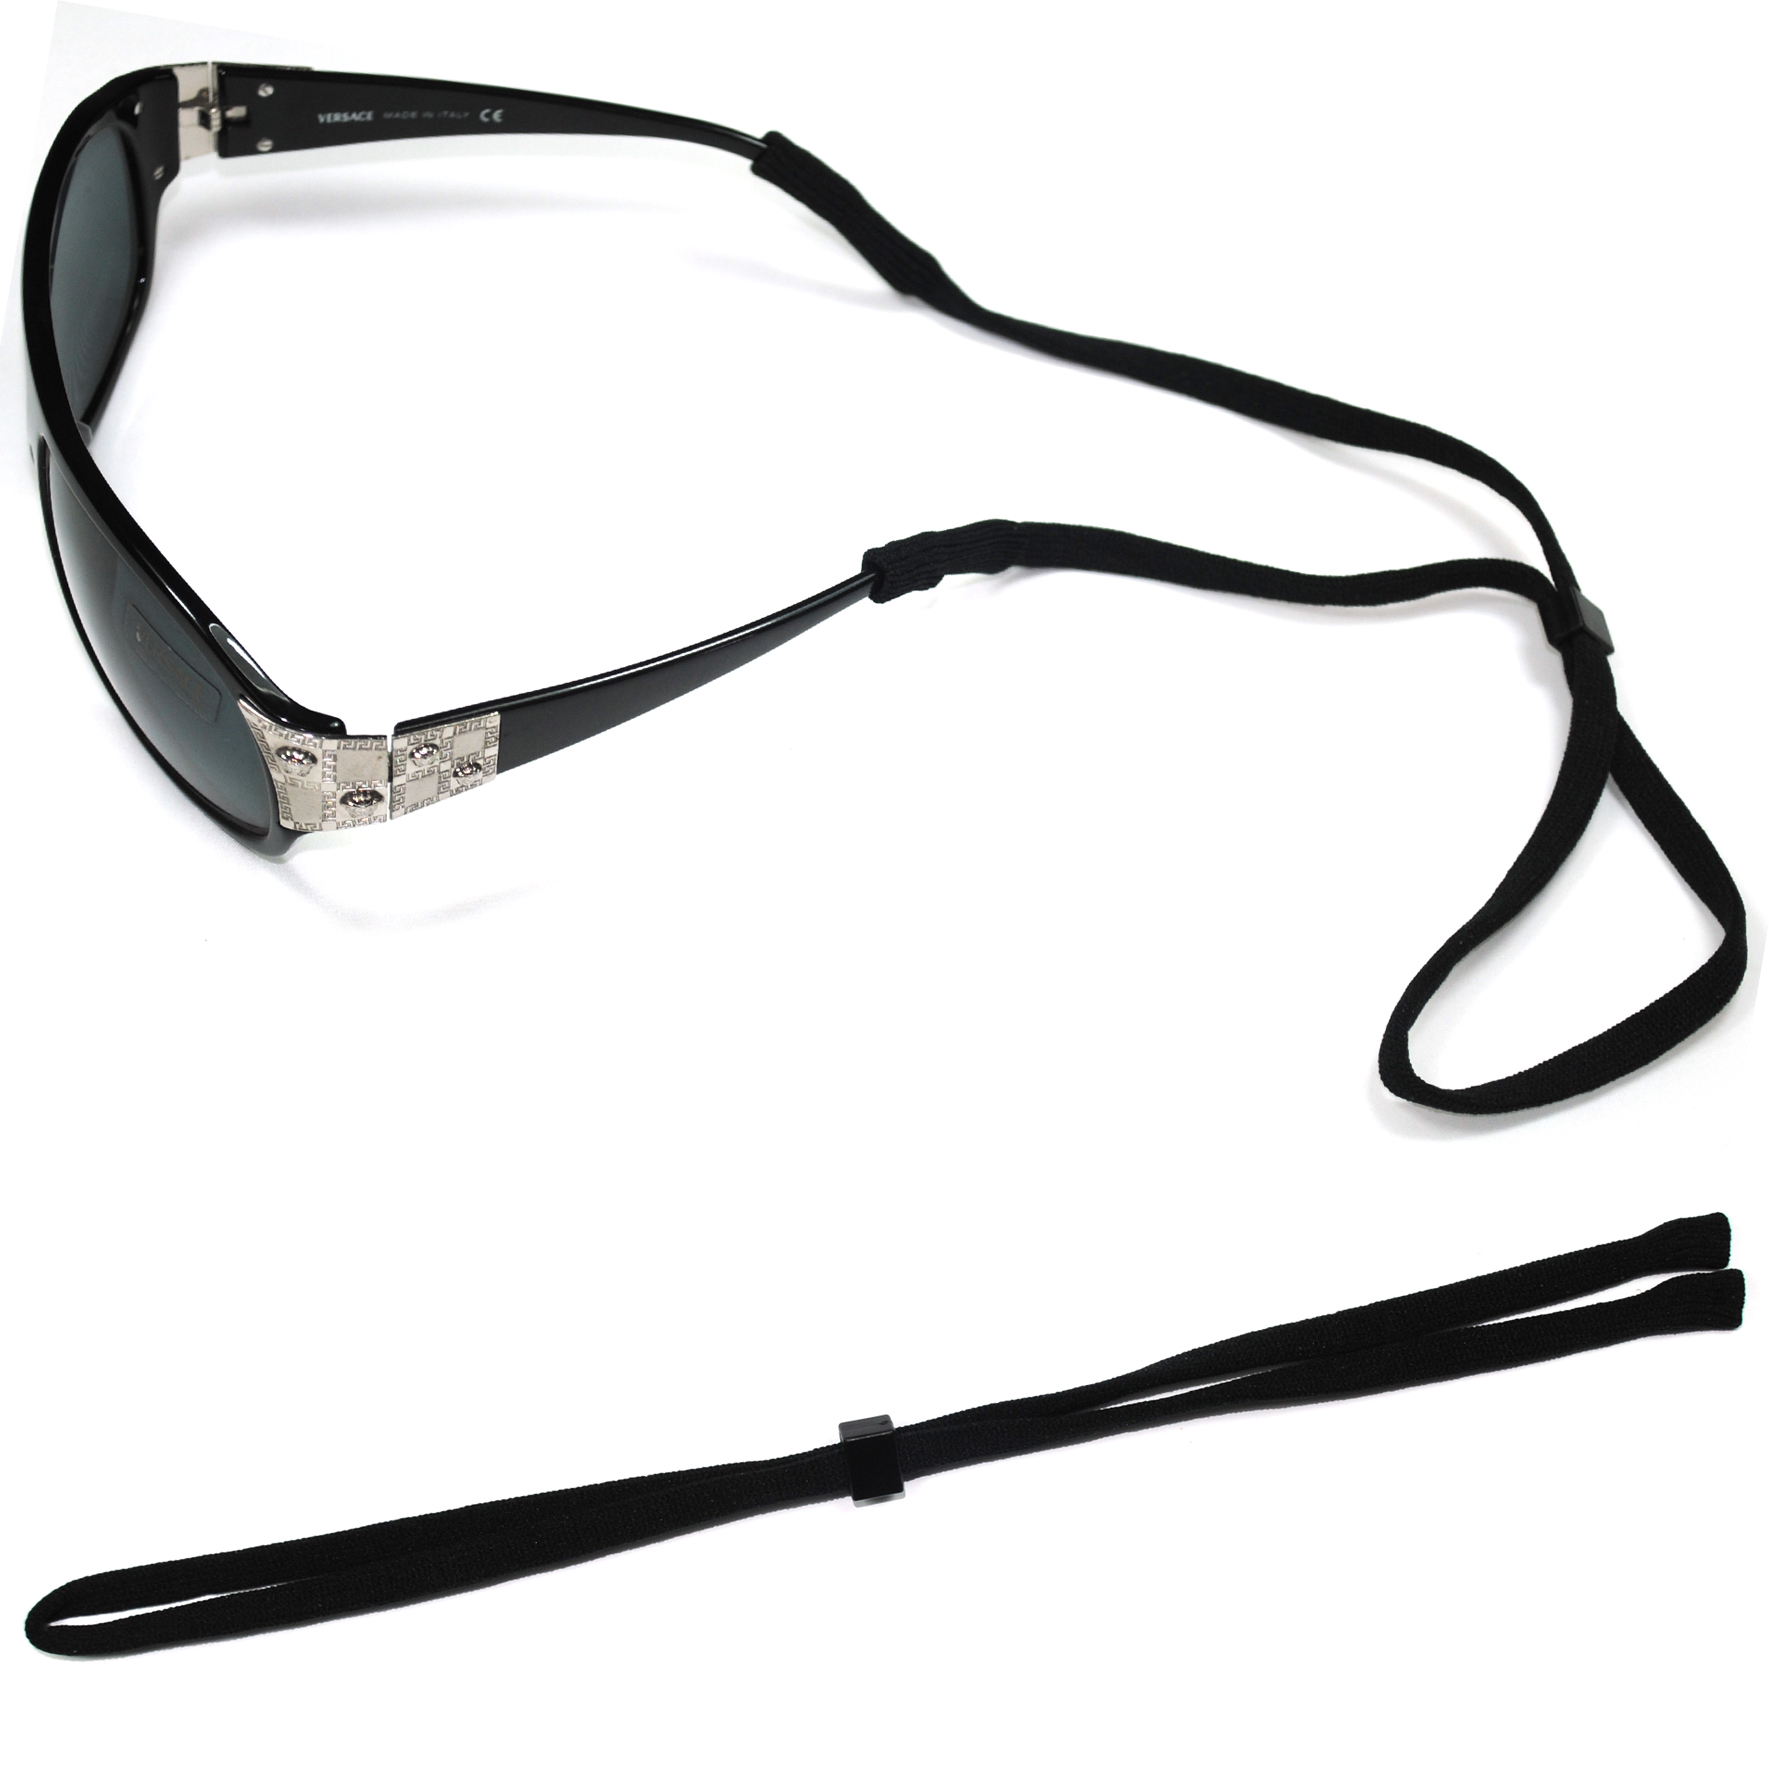 Lightweight Adjustable Eyeglass Flat Fabric Leash Strap